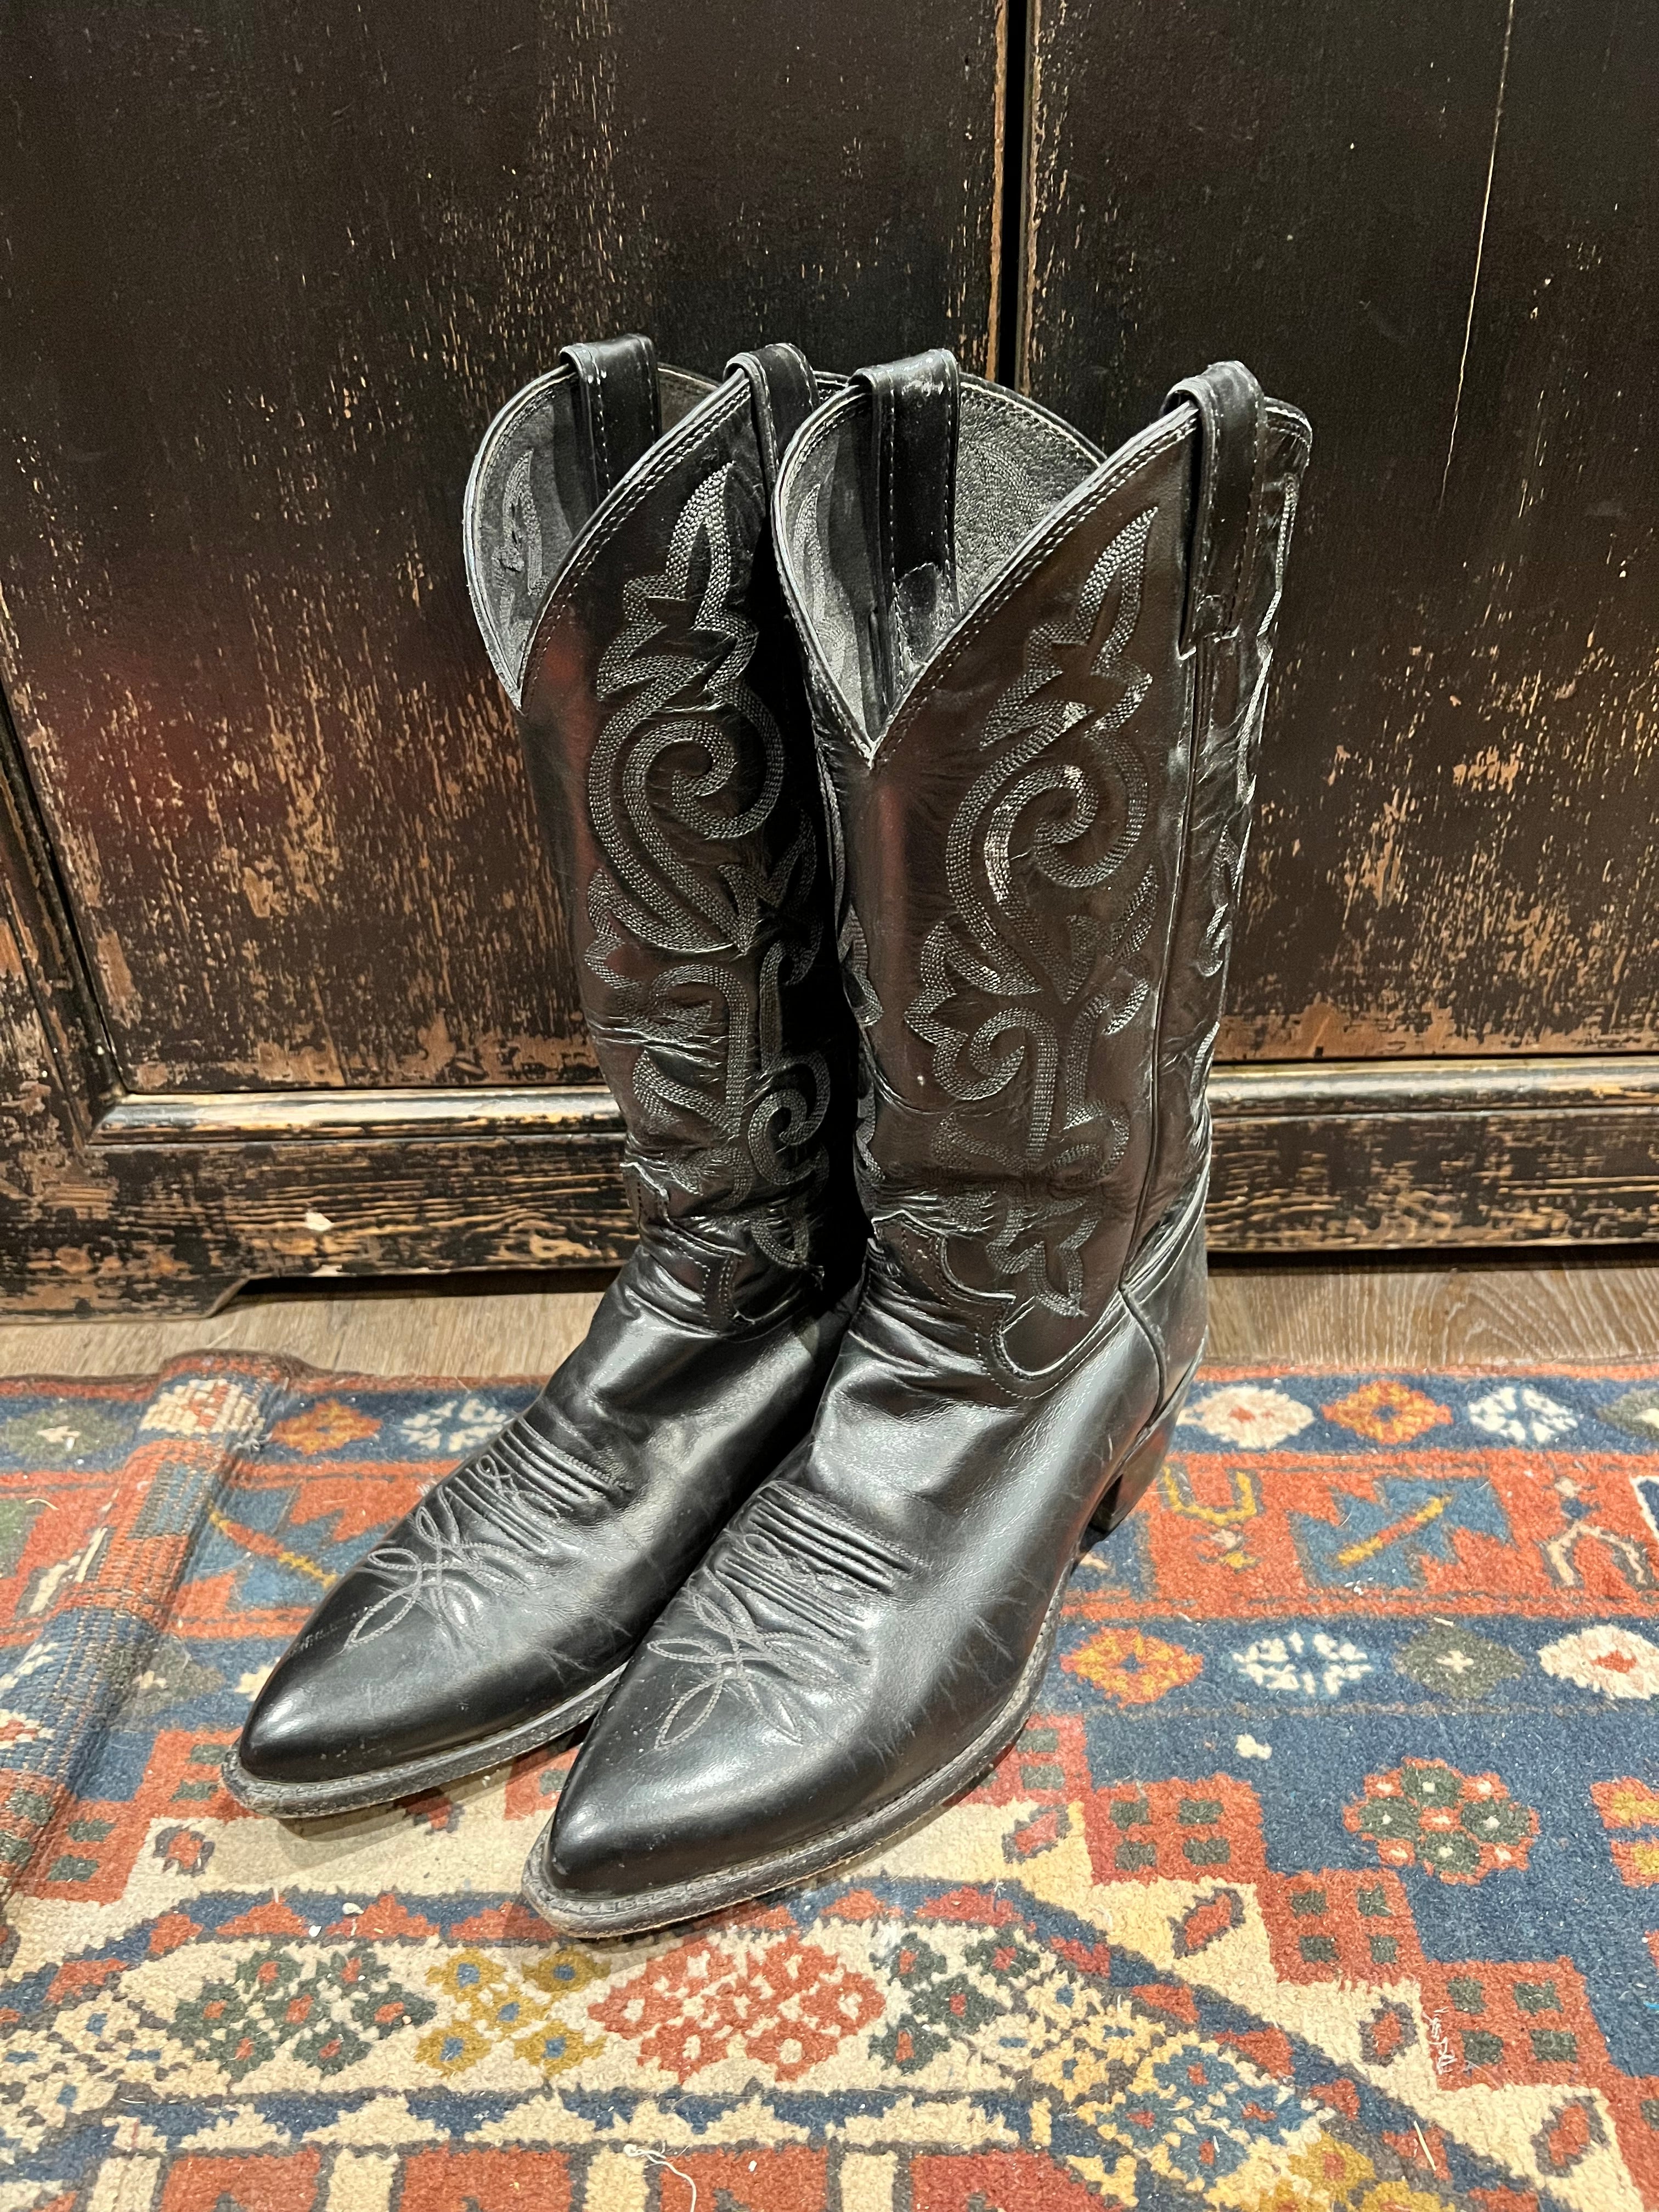 Justin Cowboy Boots